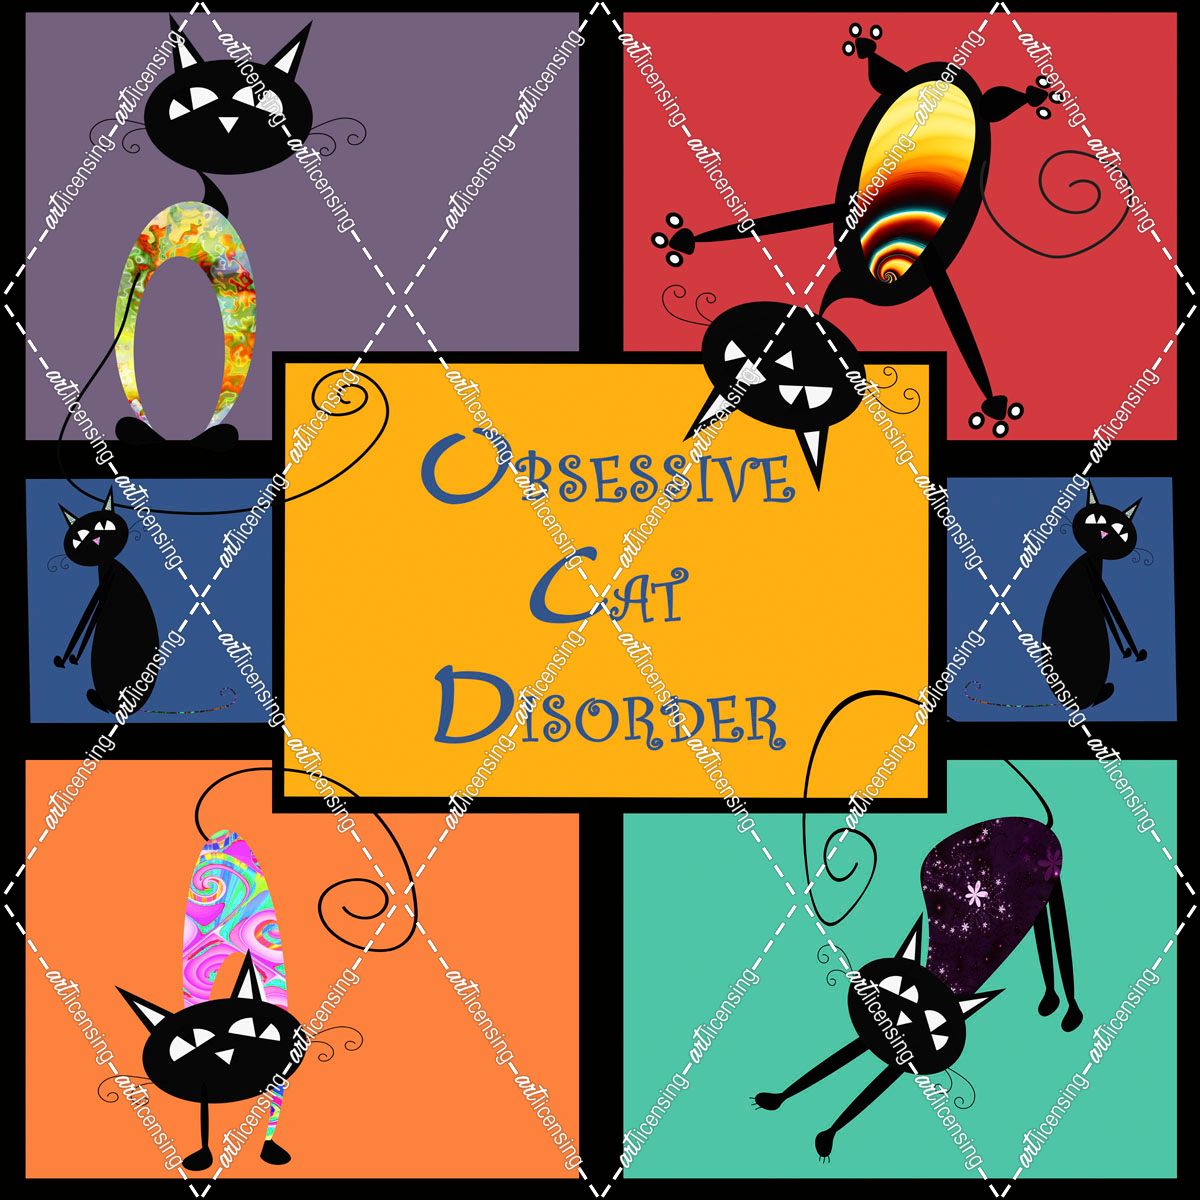 Obsessive Cat Disorder